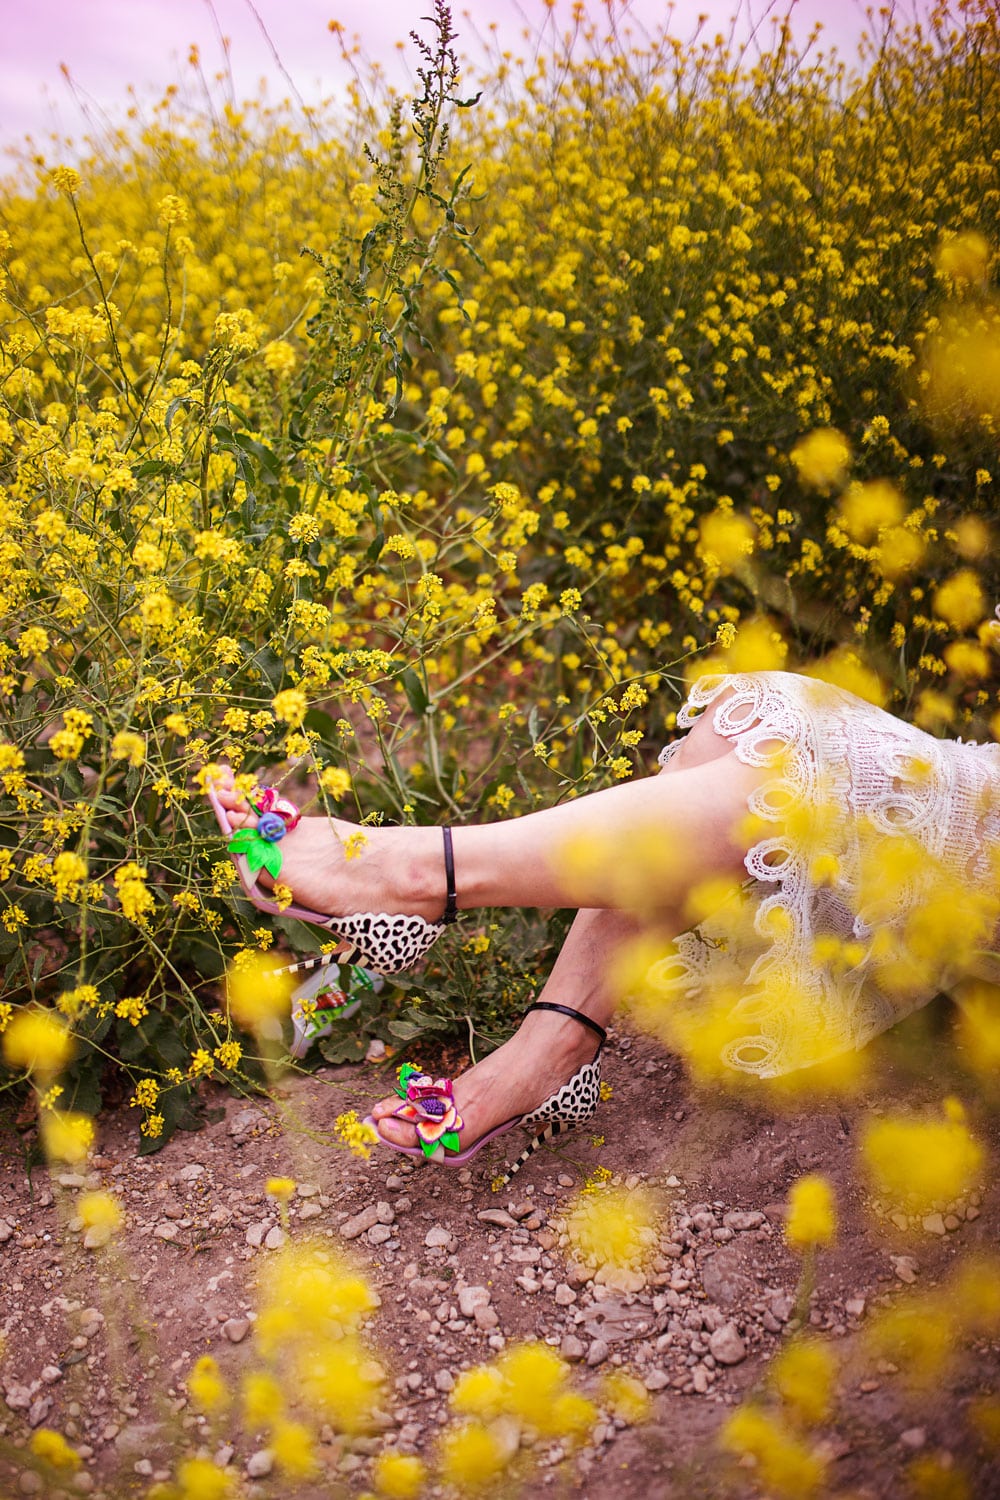 style of sam in sophia webster flower heels in yellow wildflower field fort worth tx